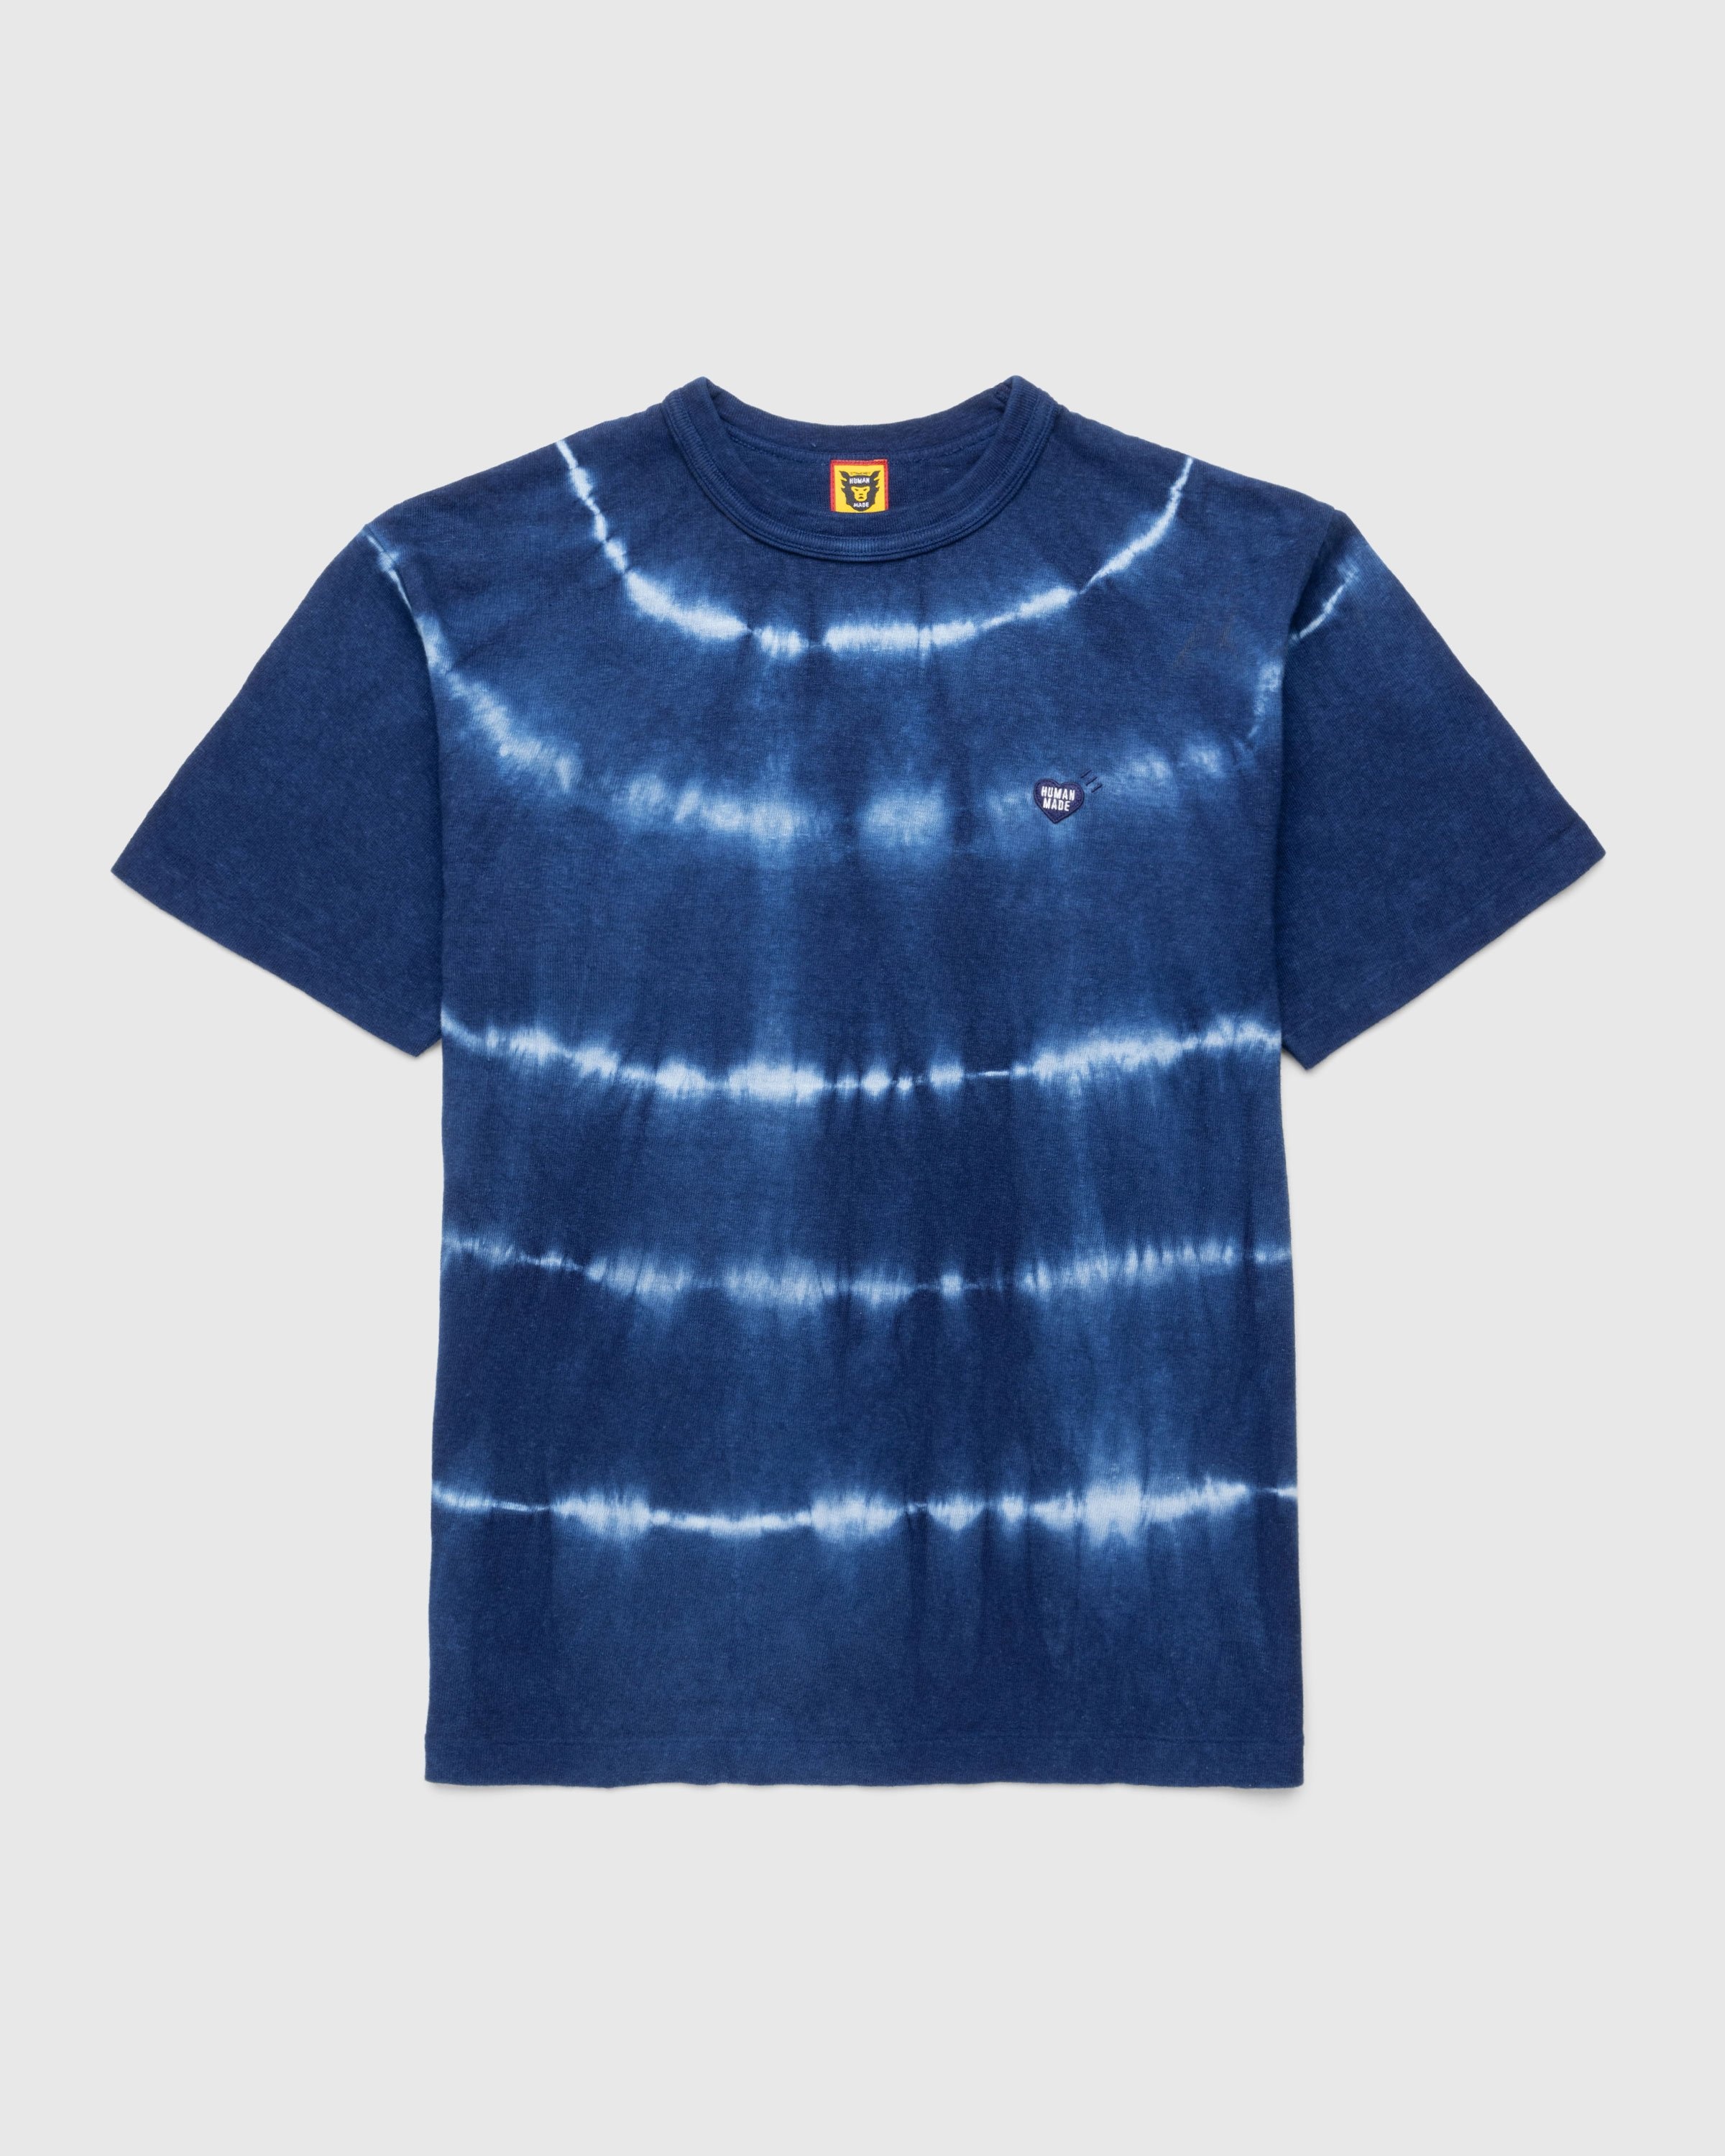 Human Made – Ningen-sei Indigo Dyed T-Shirt #1 Blue | Highsnobiety Shop